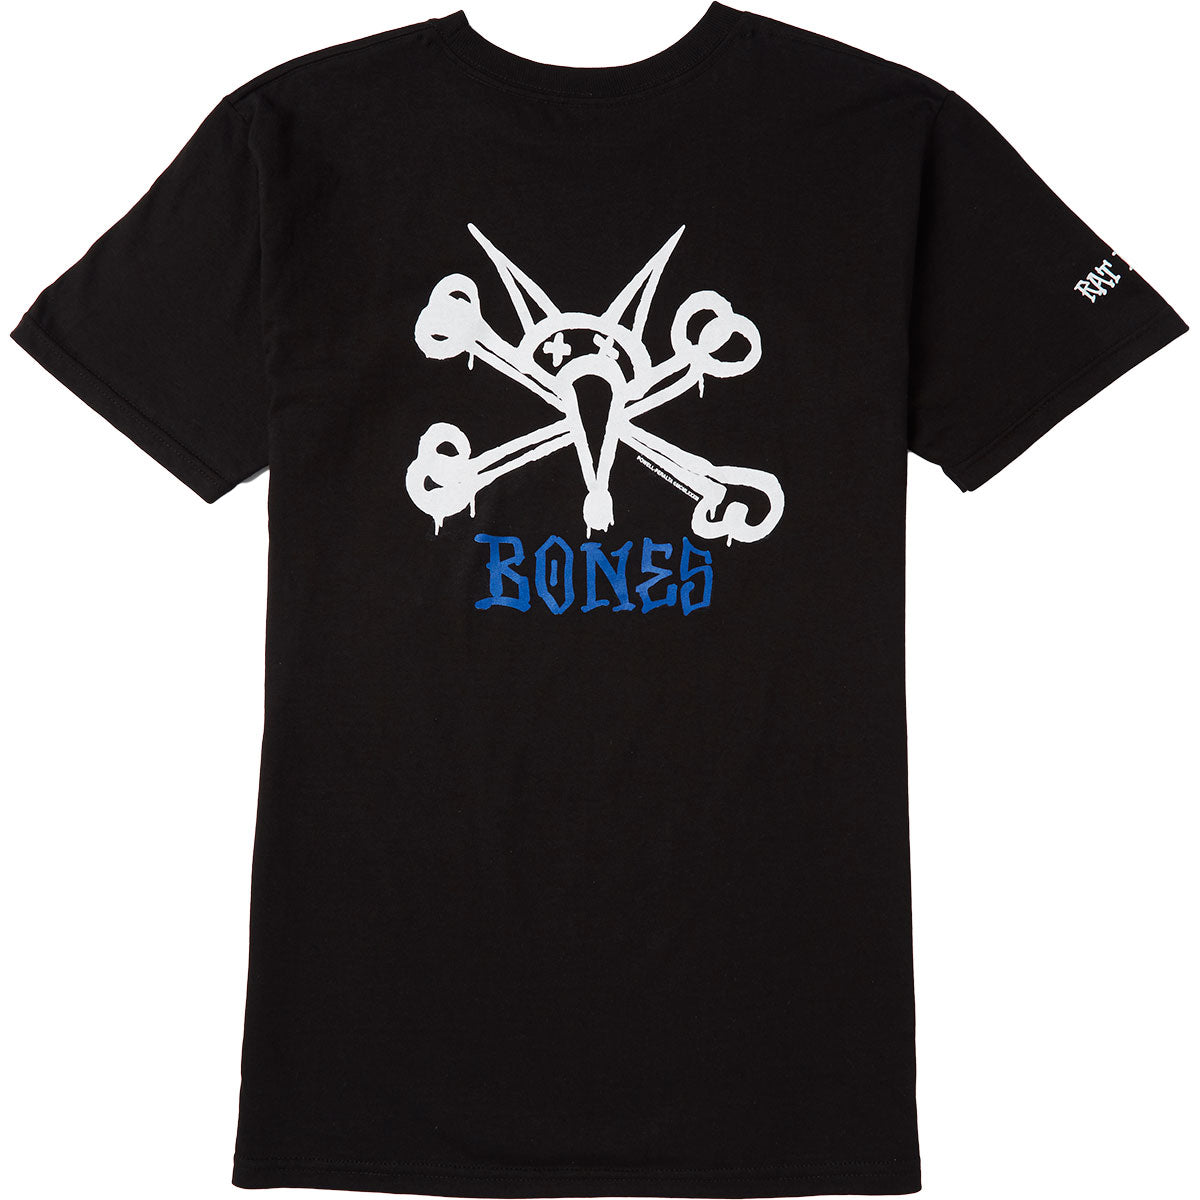 Powell-Peralta Rat Bones T-Shirt - Black image 1